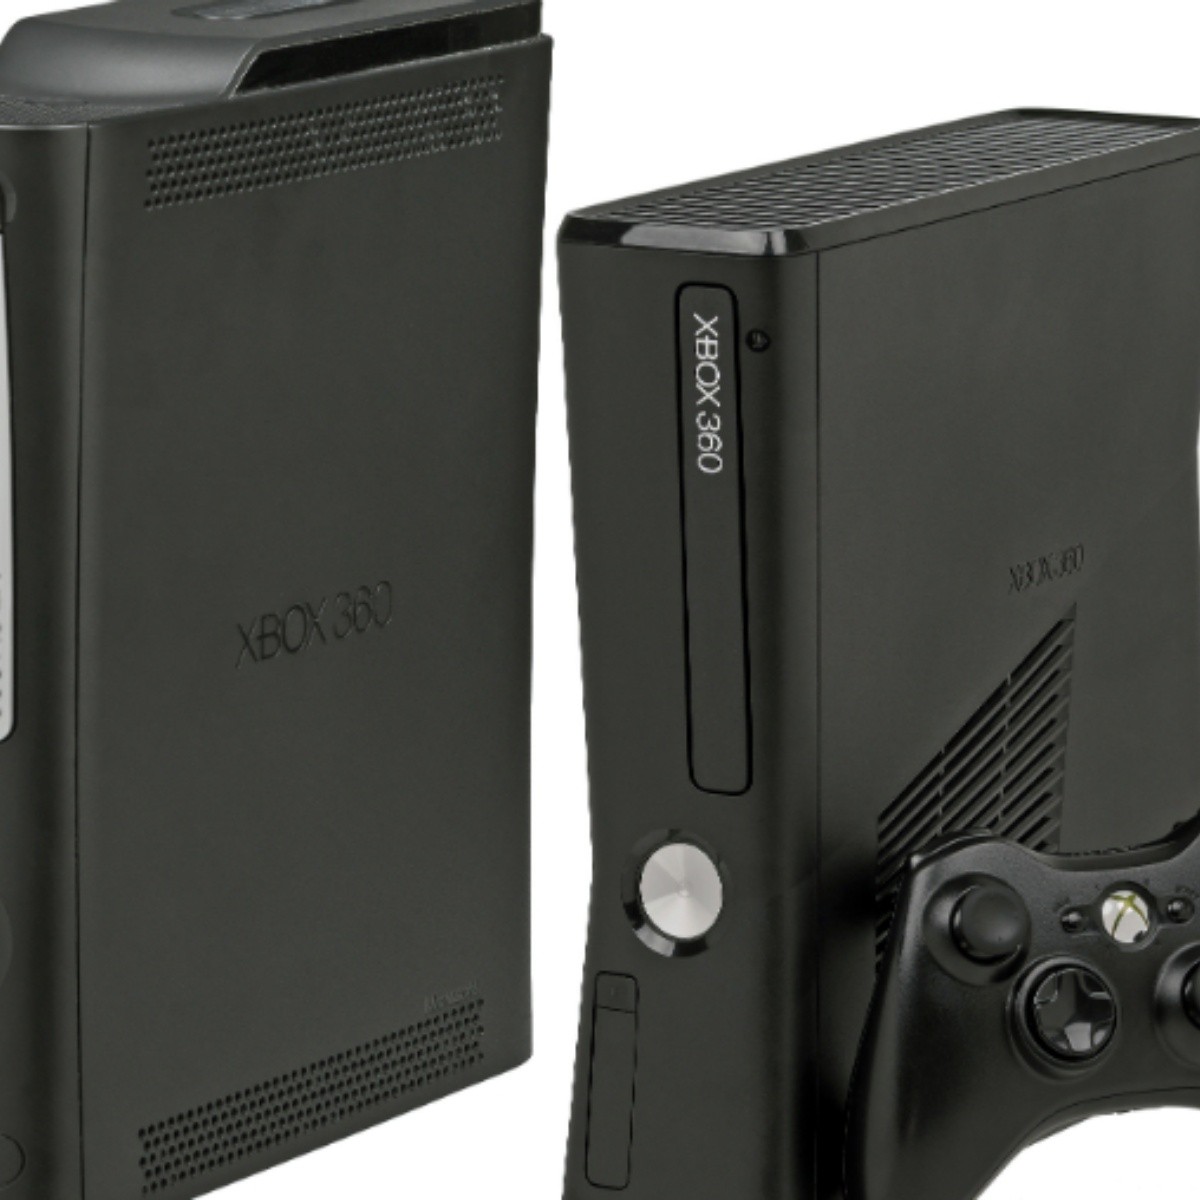 Microsoft deja de fabricar la consola Xbox 360